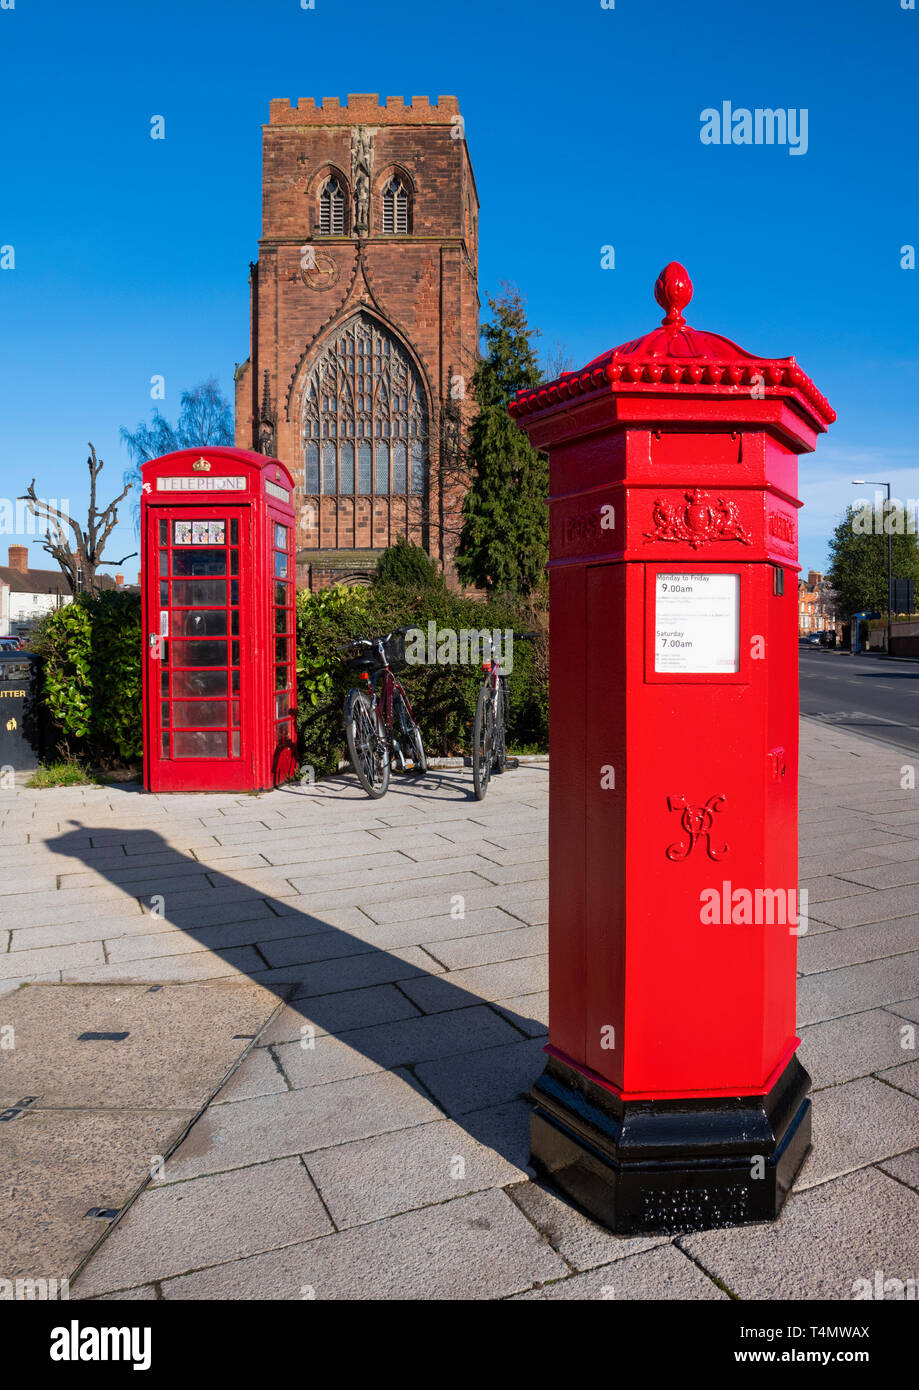 Post box and phone box outside Shrewsbury Abbey, Shropshire, UK. Stock Photo